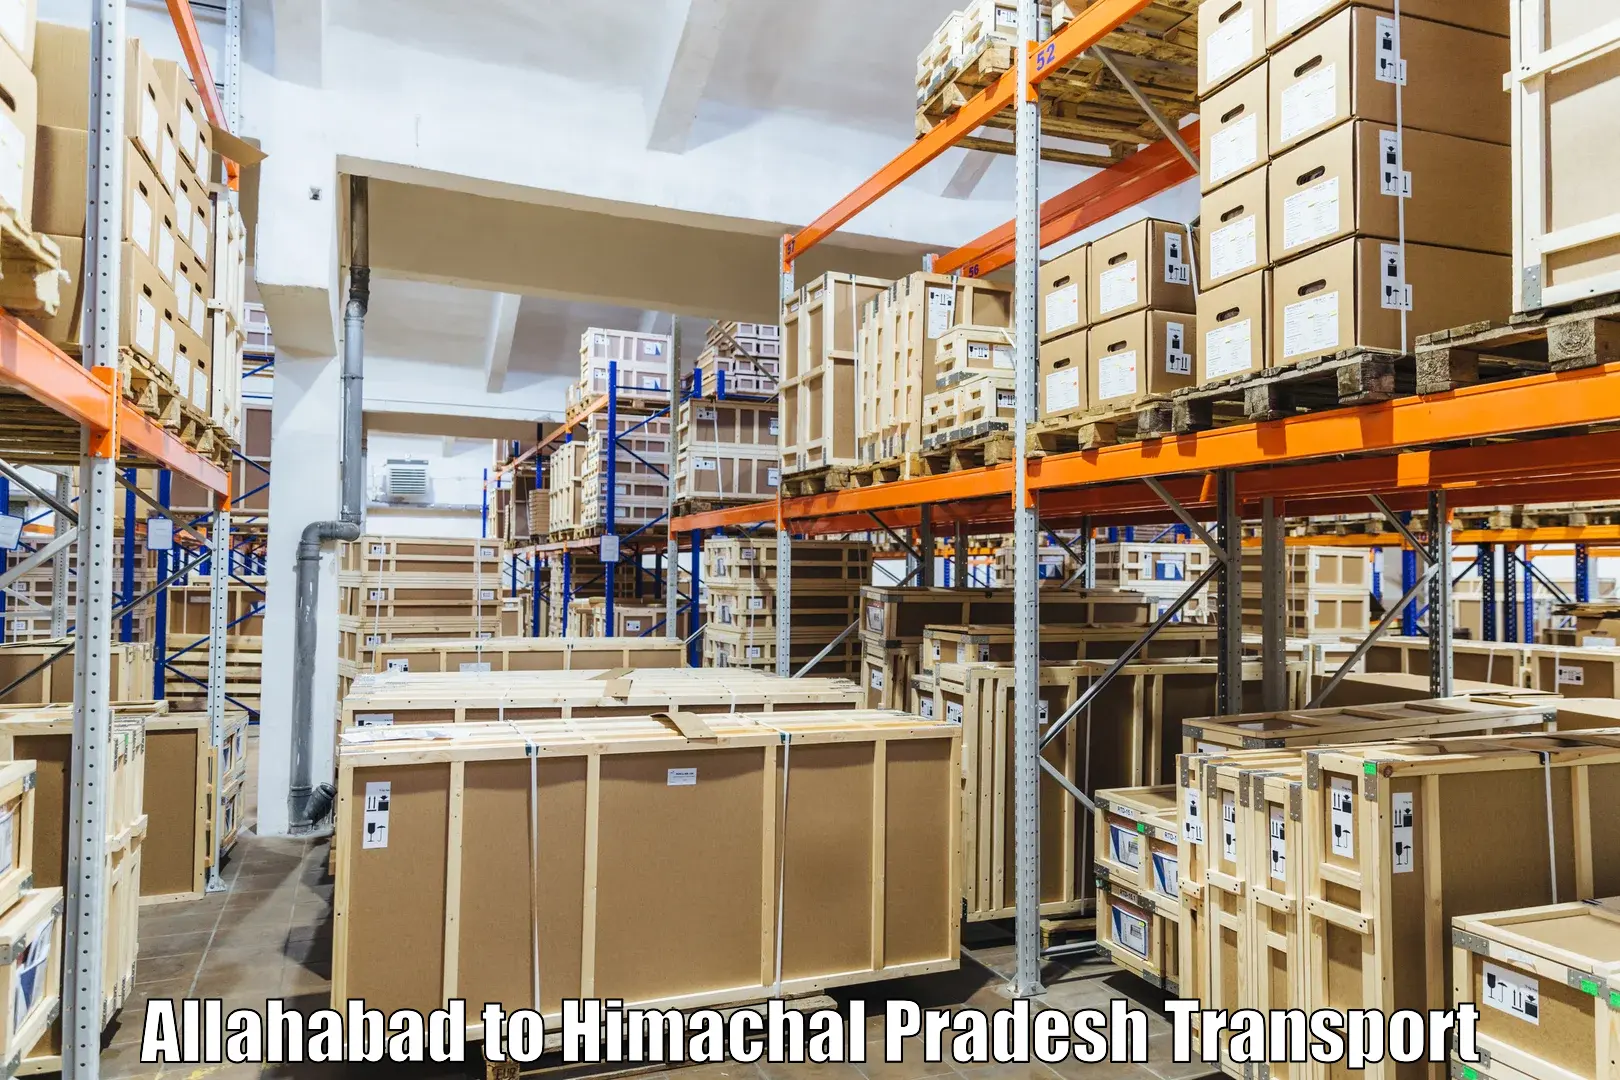 Shipping partner Allahabad to Rehan